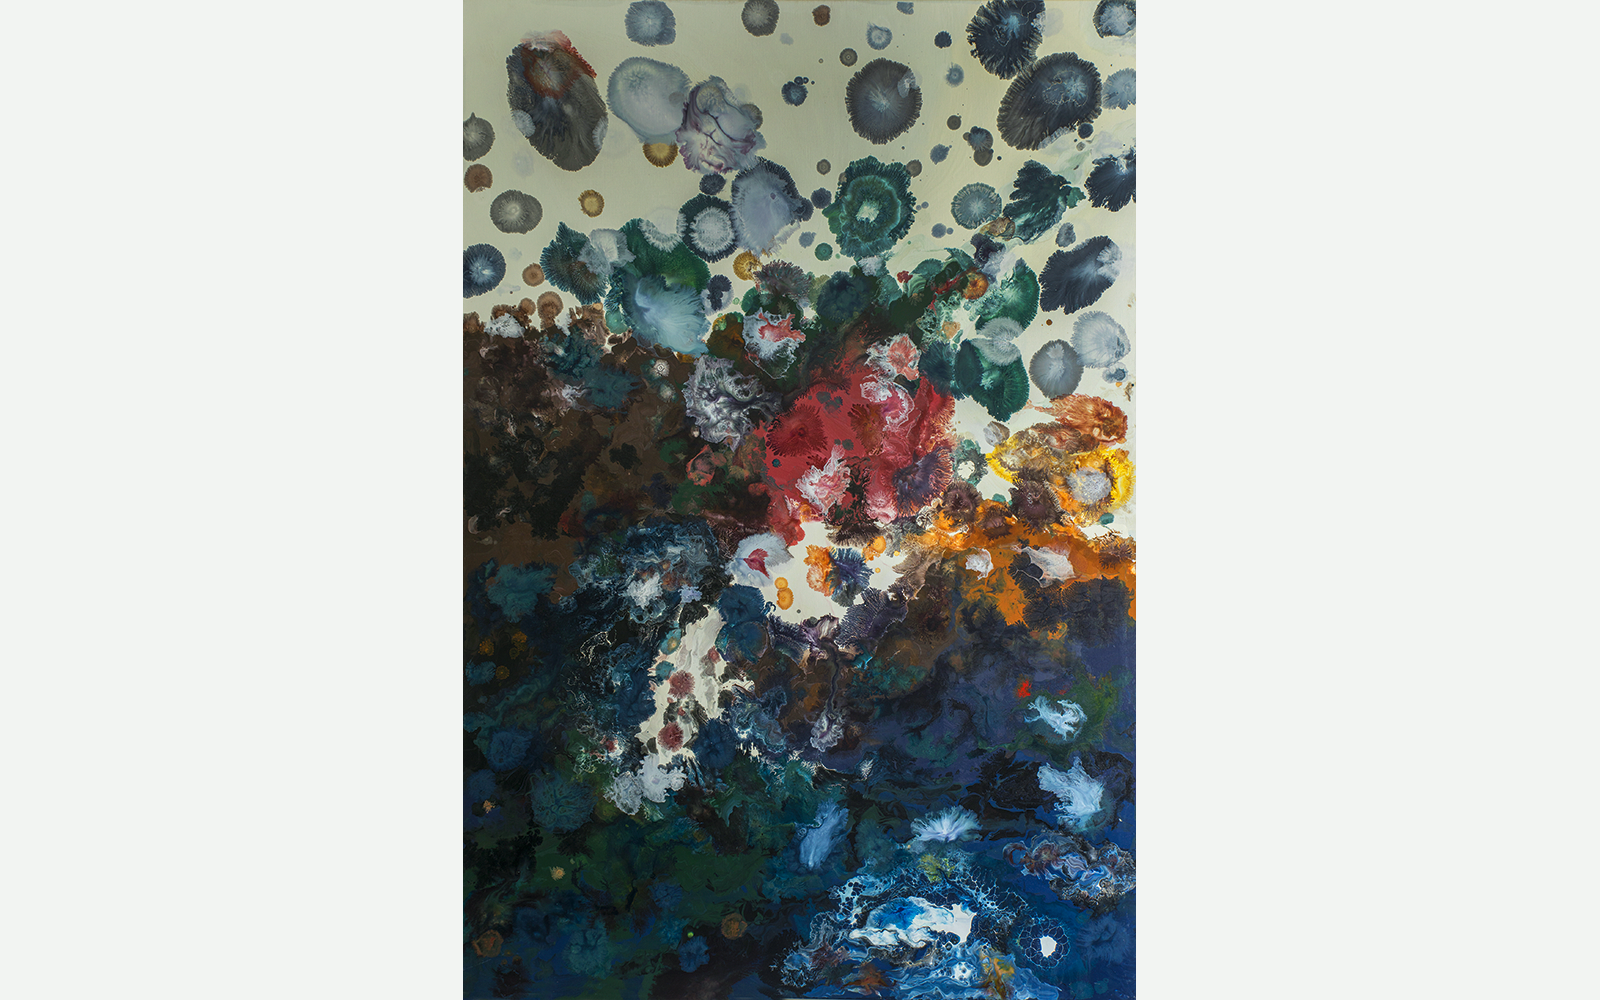 Hilden & Diaz 
Liquid Paintings, 2010 
Mixed media på lærred. 
190 × 130 cm.